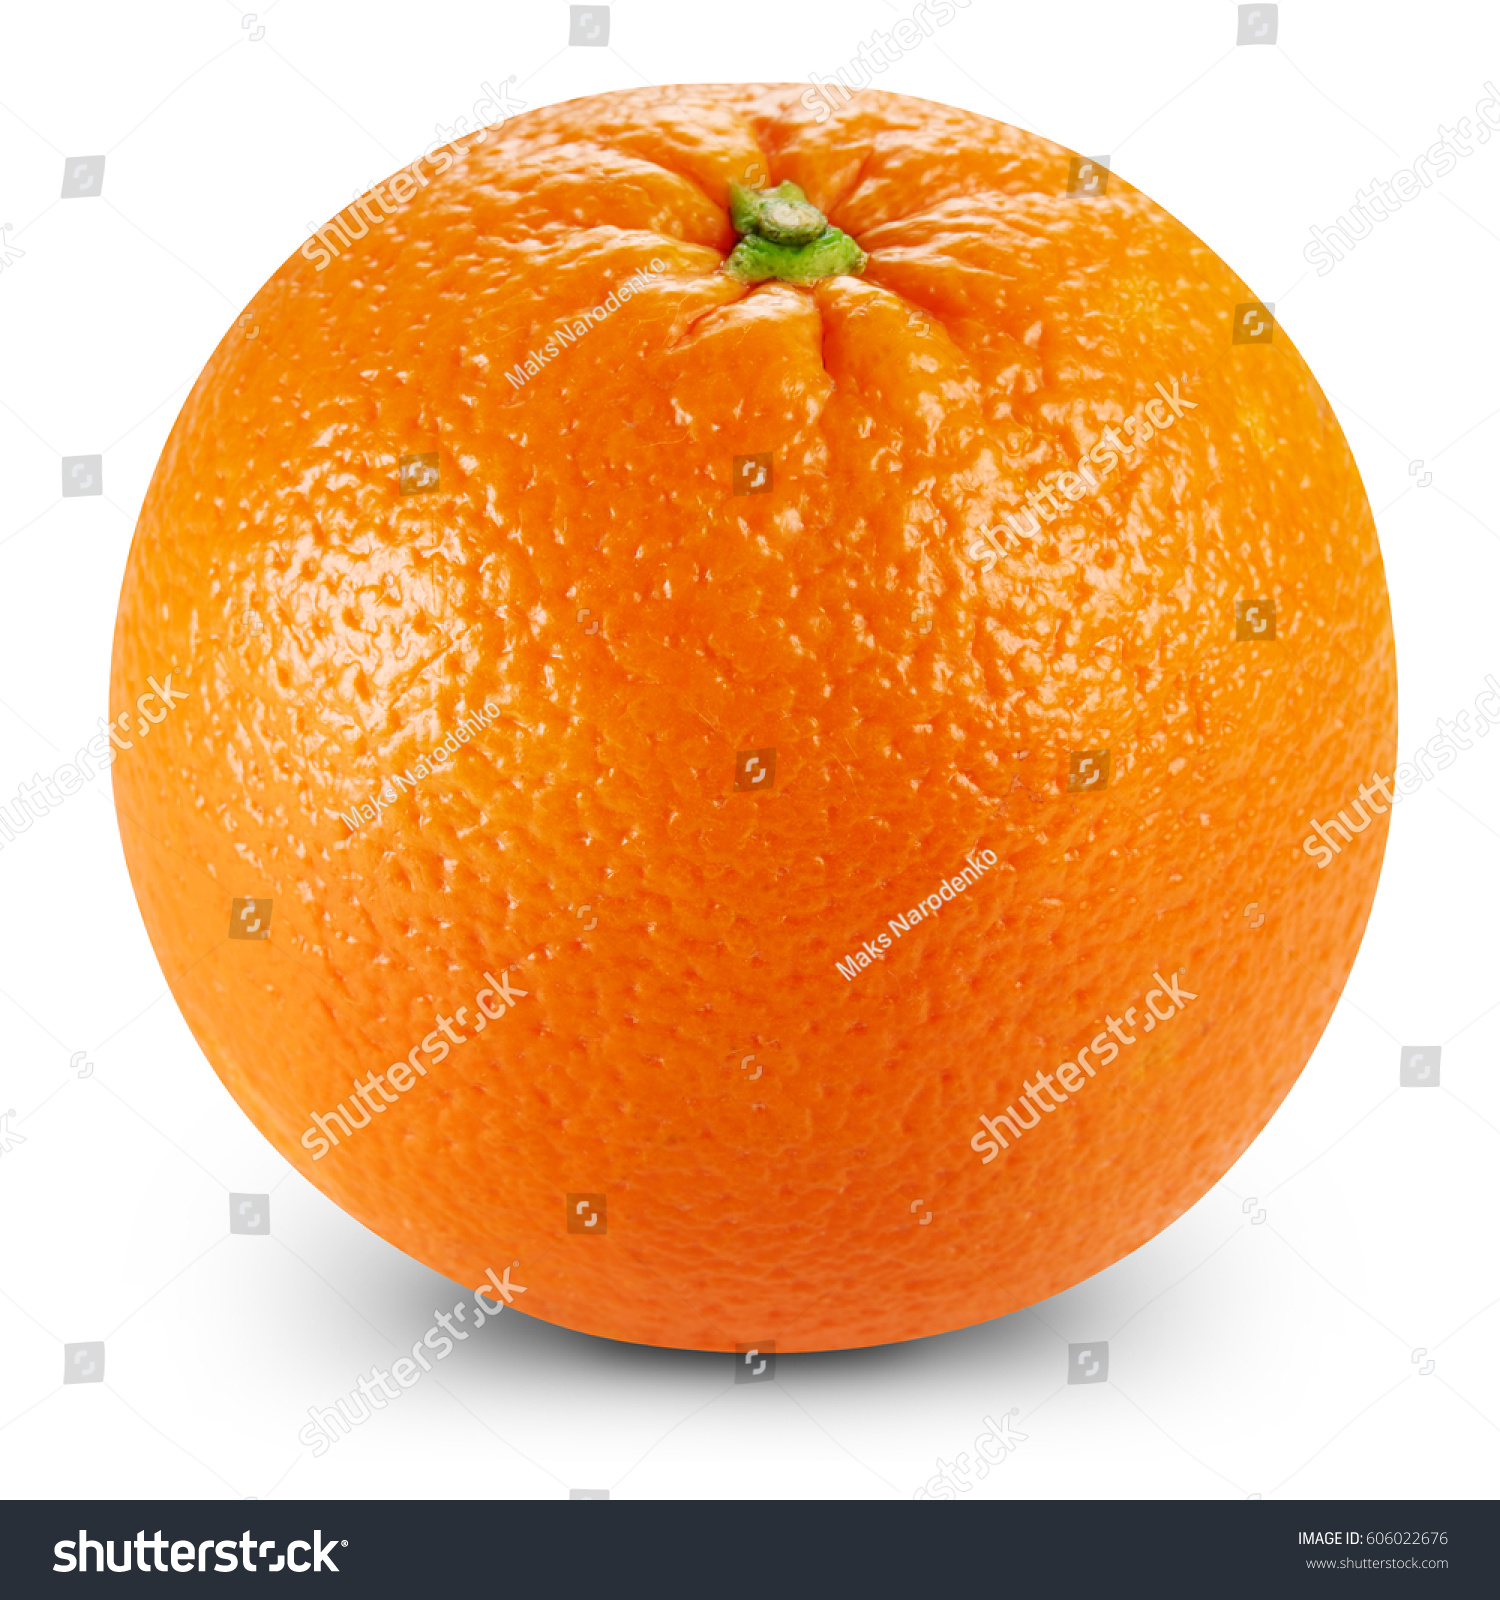 Ripe orange isolated on white background Clipping Path #606022676